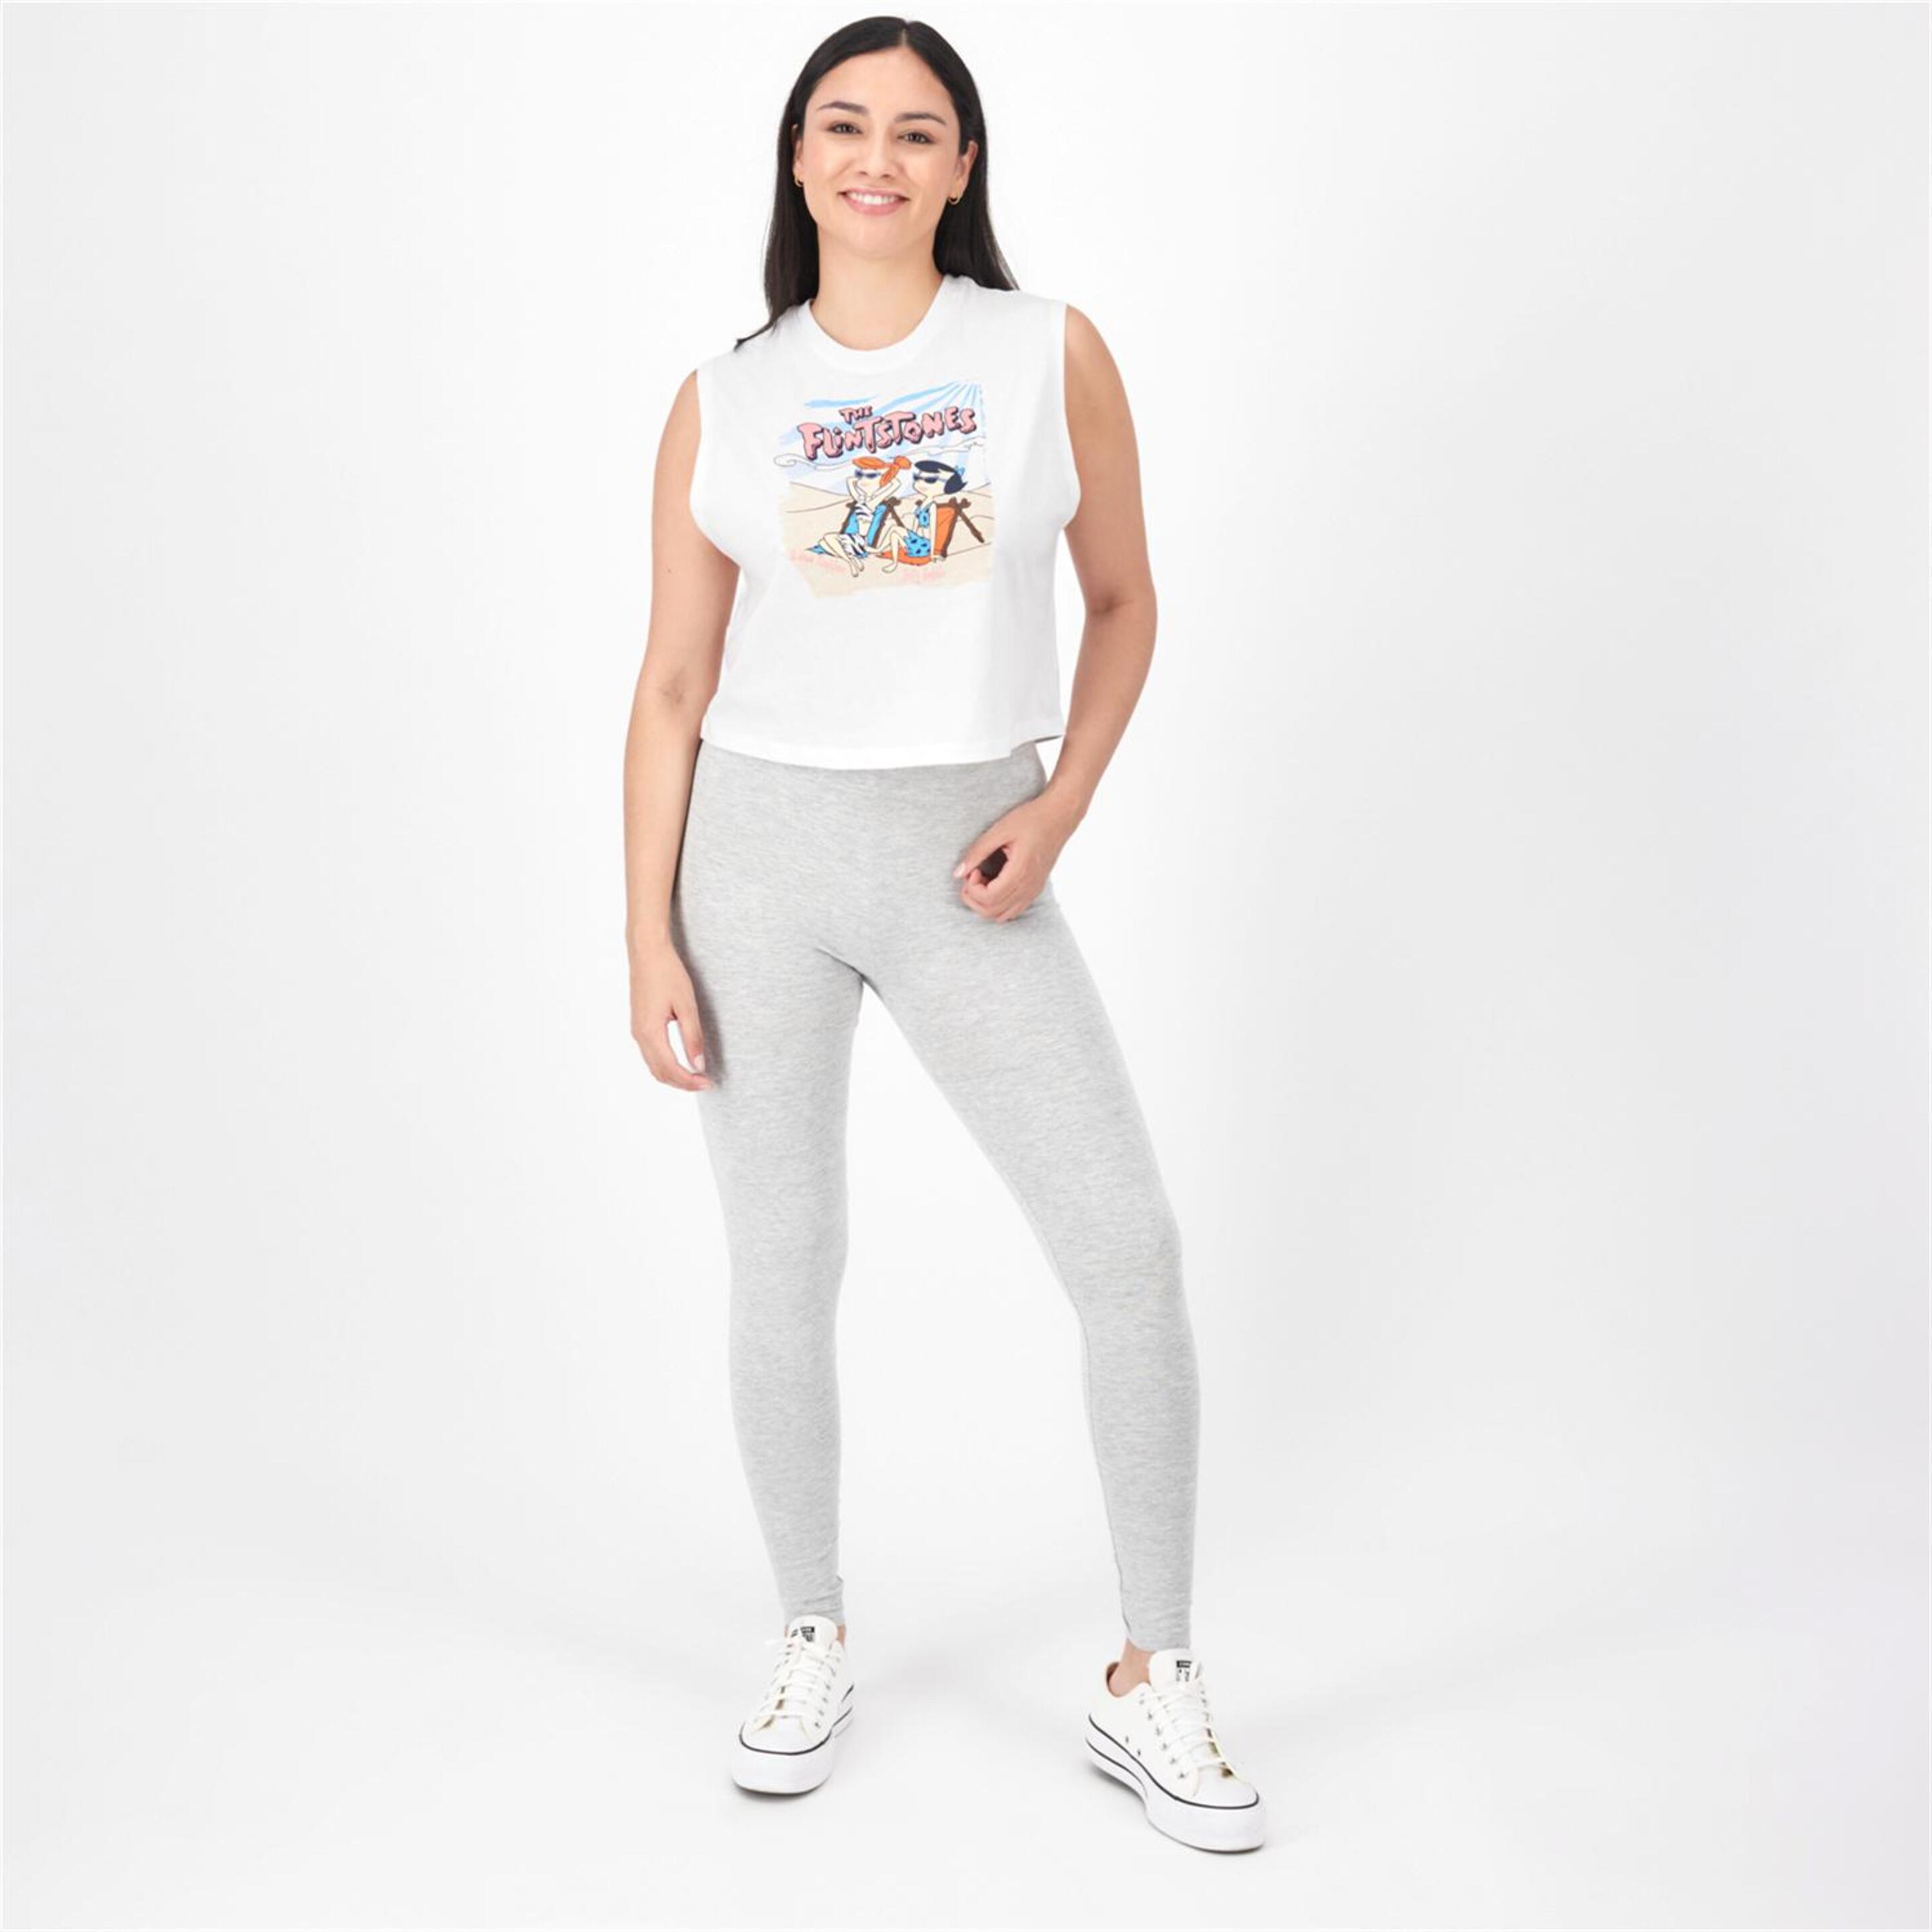 Camiseta Wilma & Betty - Blanco - Camiseta Mujer Los Picapiedra